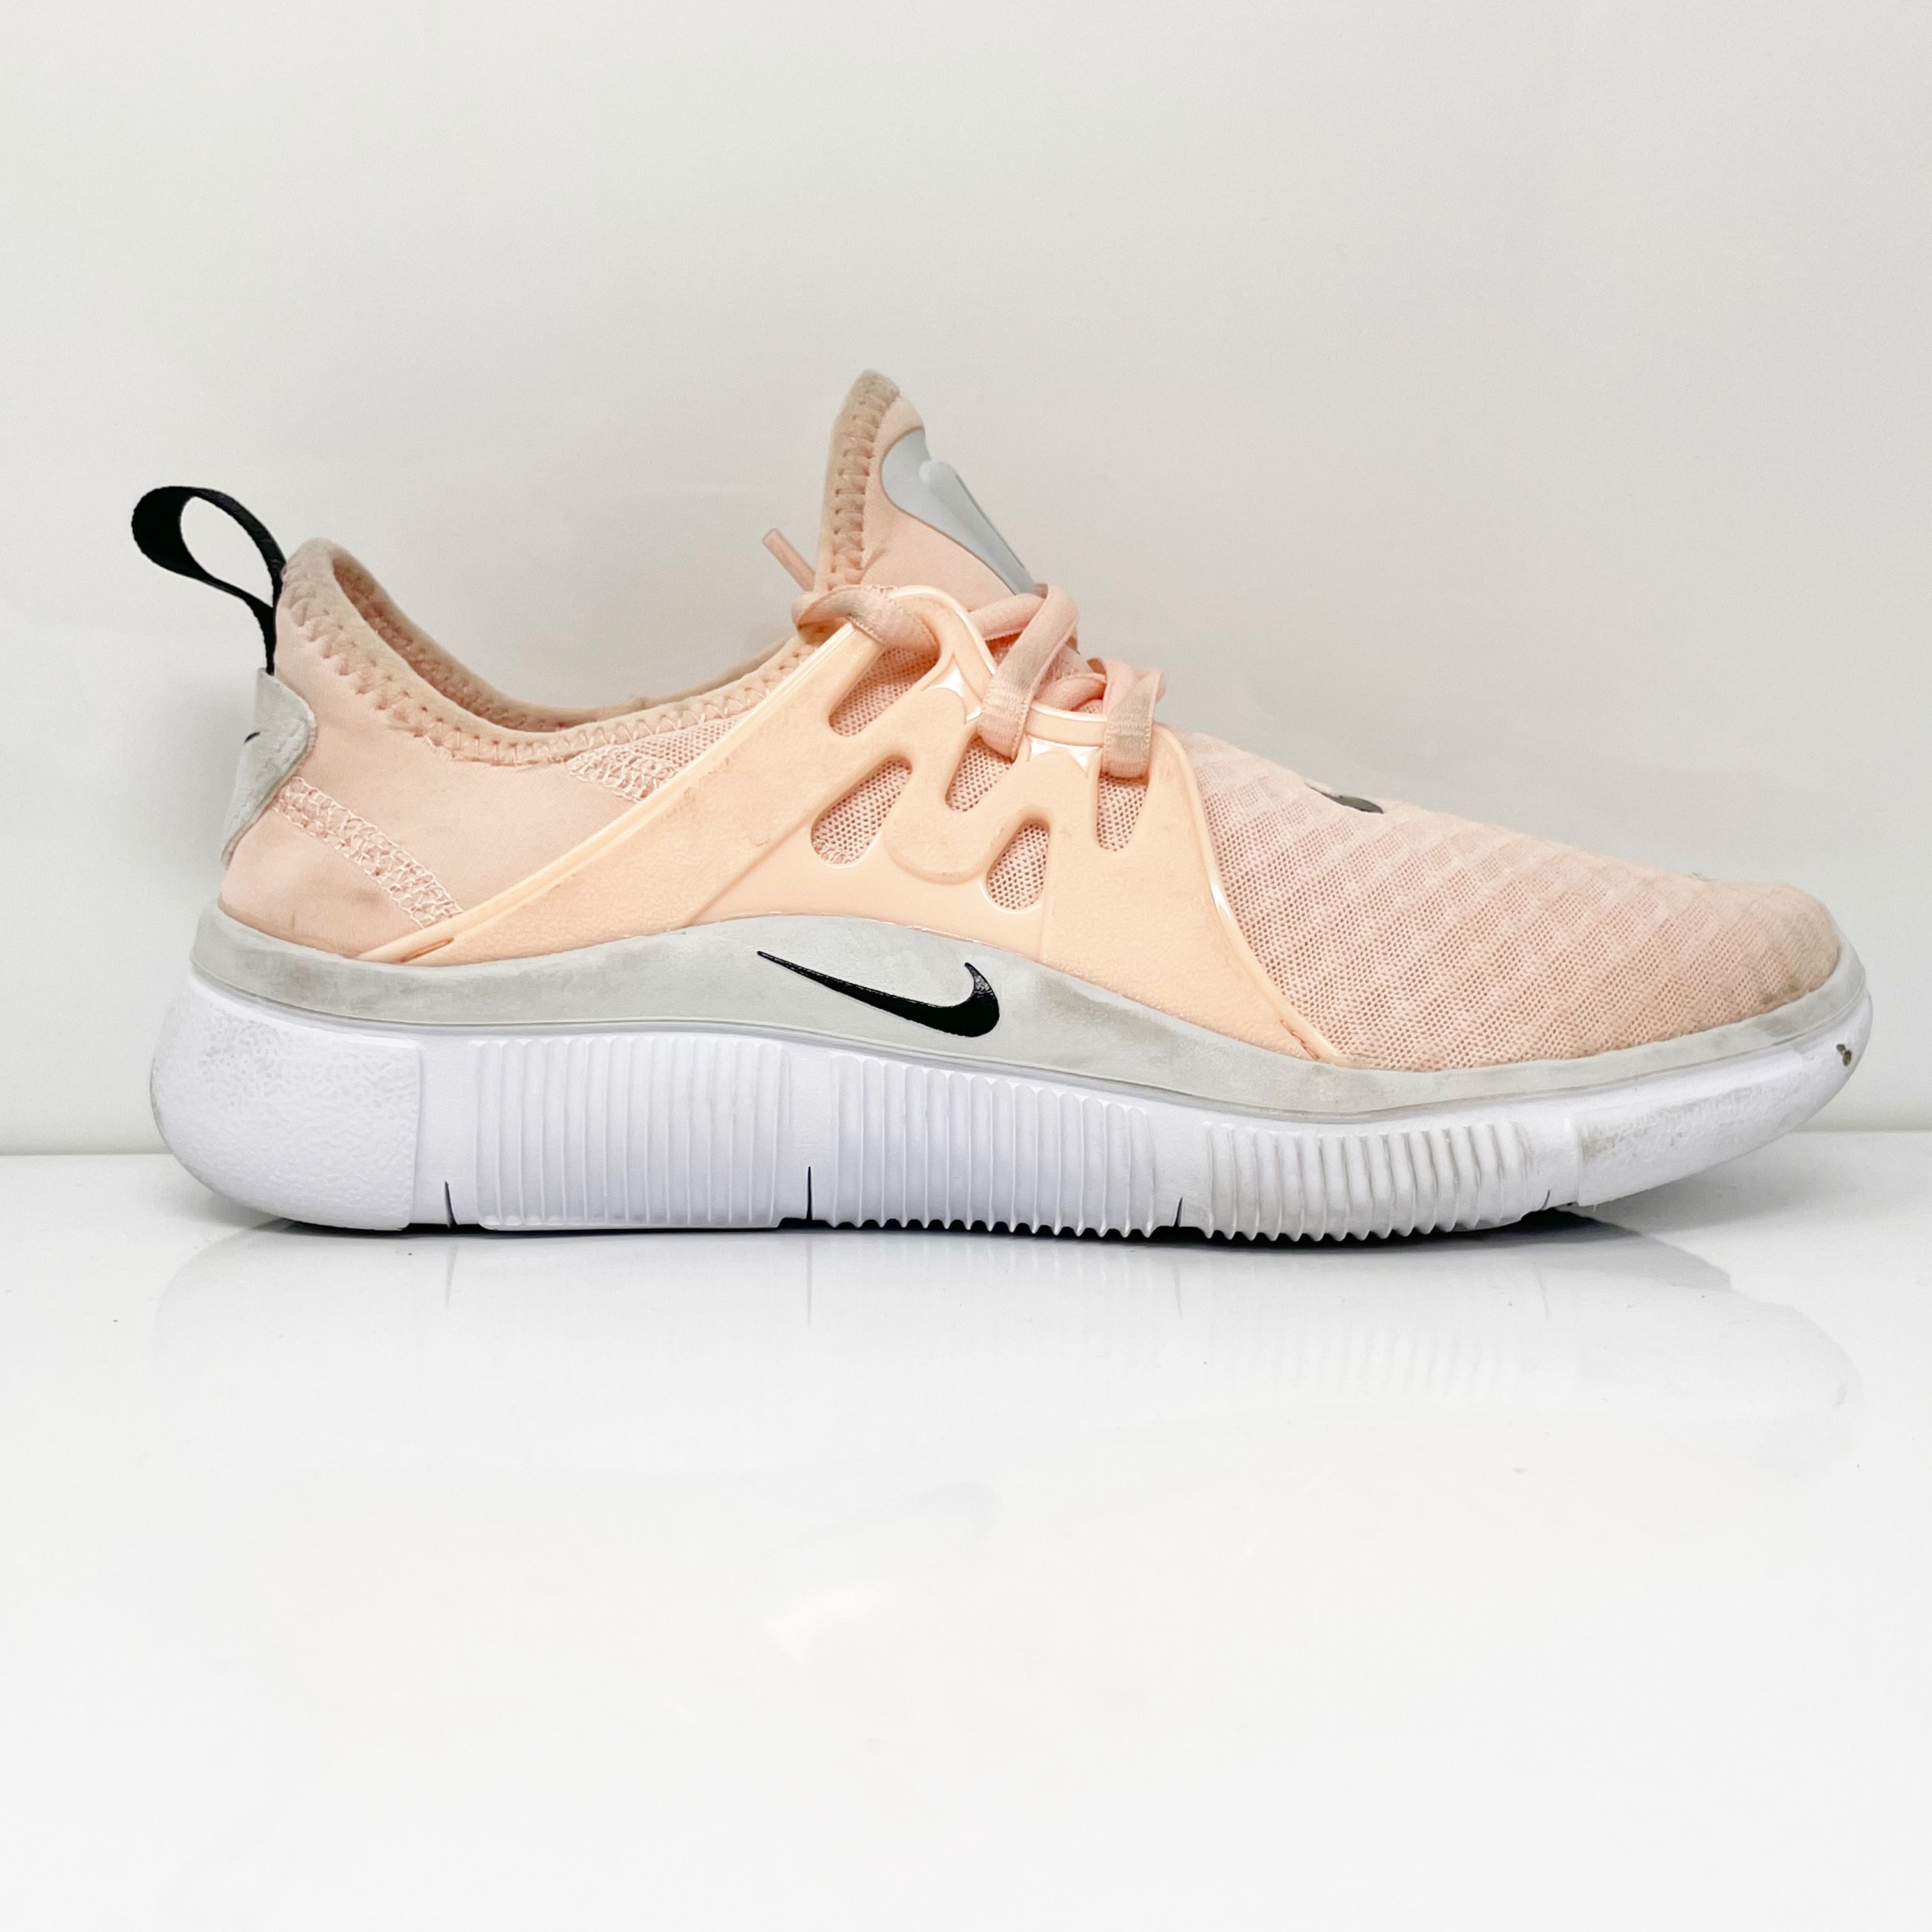 Nike Womens Acalme AQ7459-600 Orange Running Shoes Sneakers Size 7 | eBay